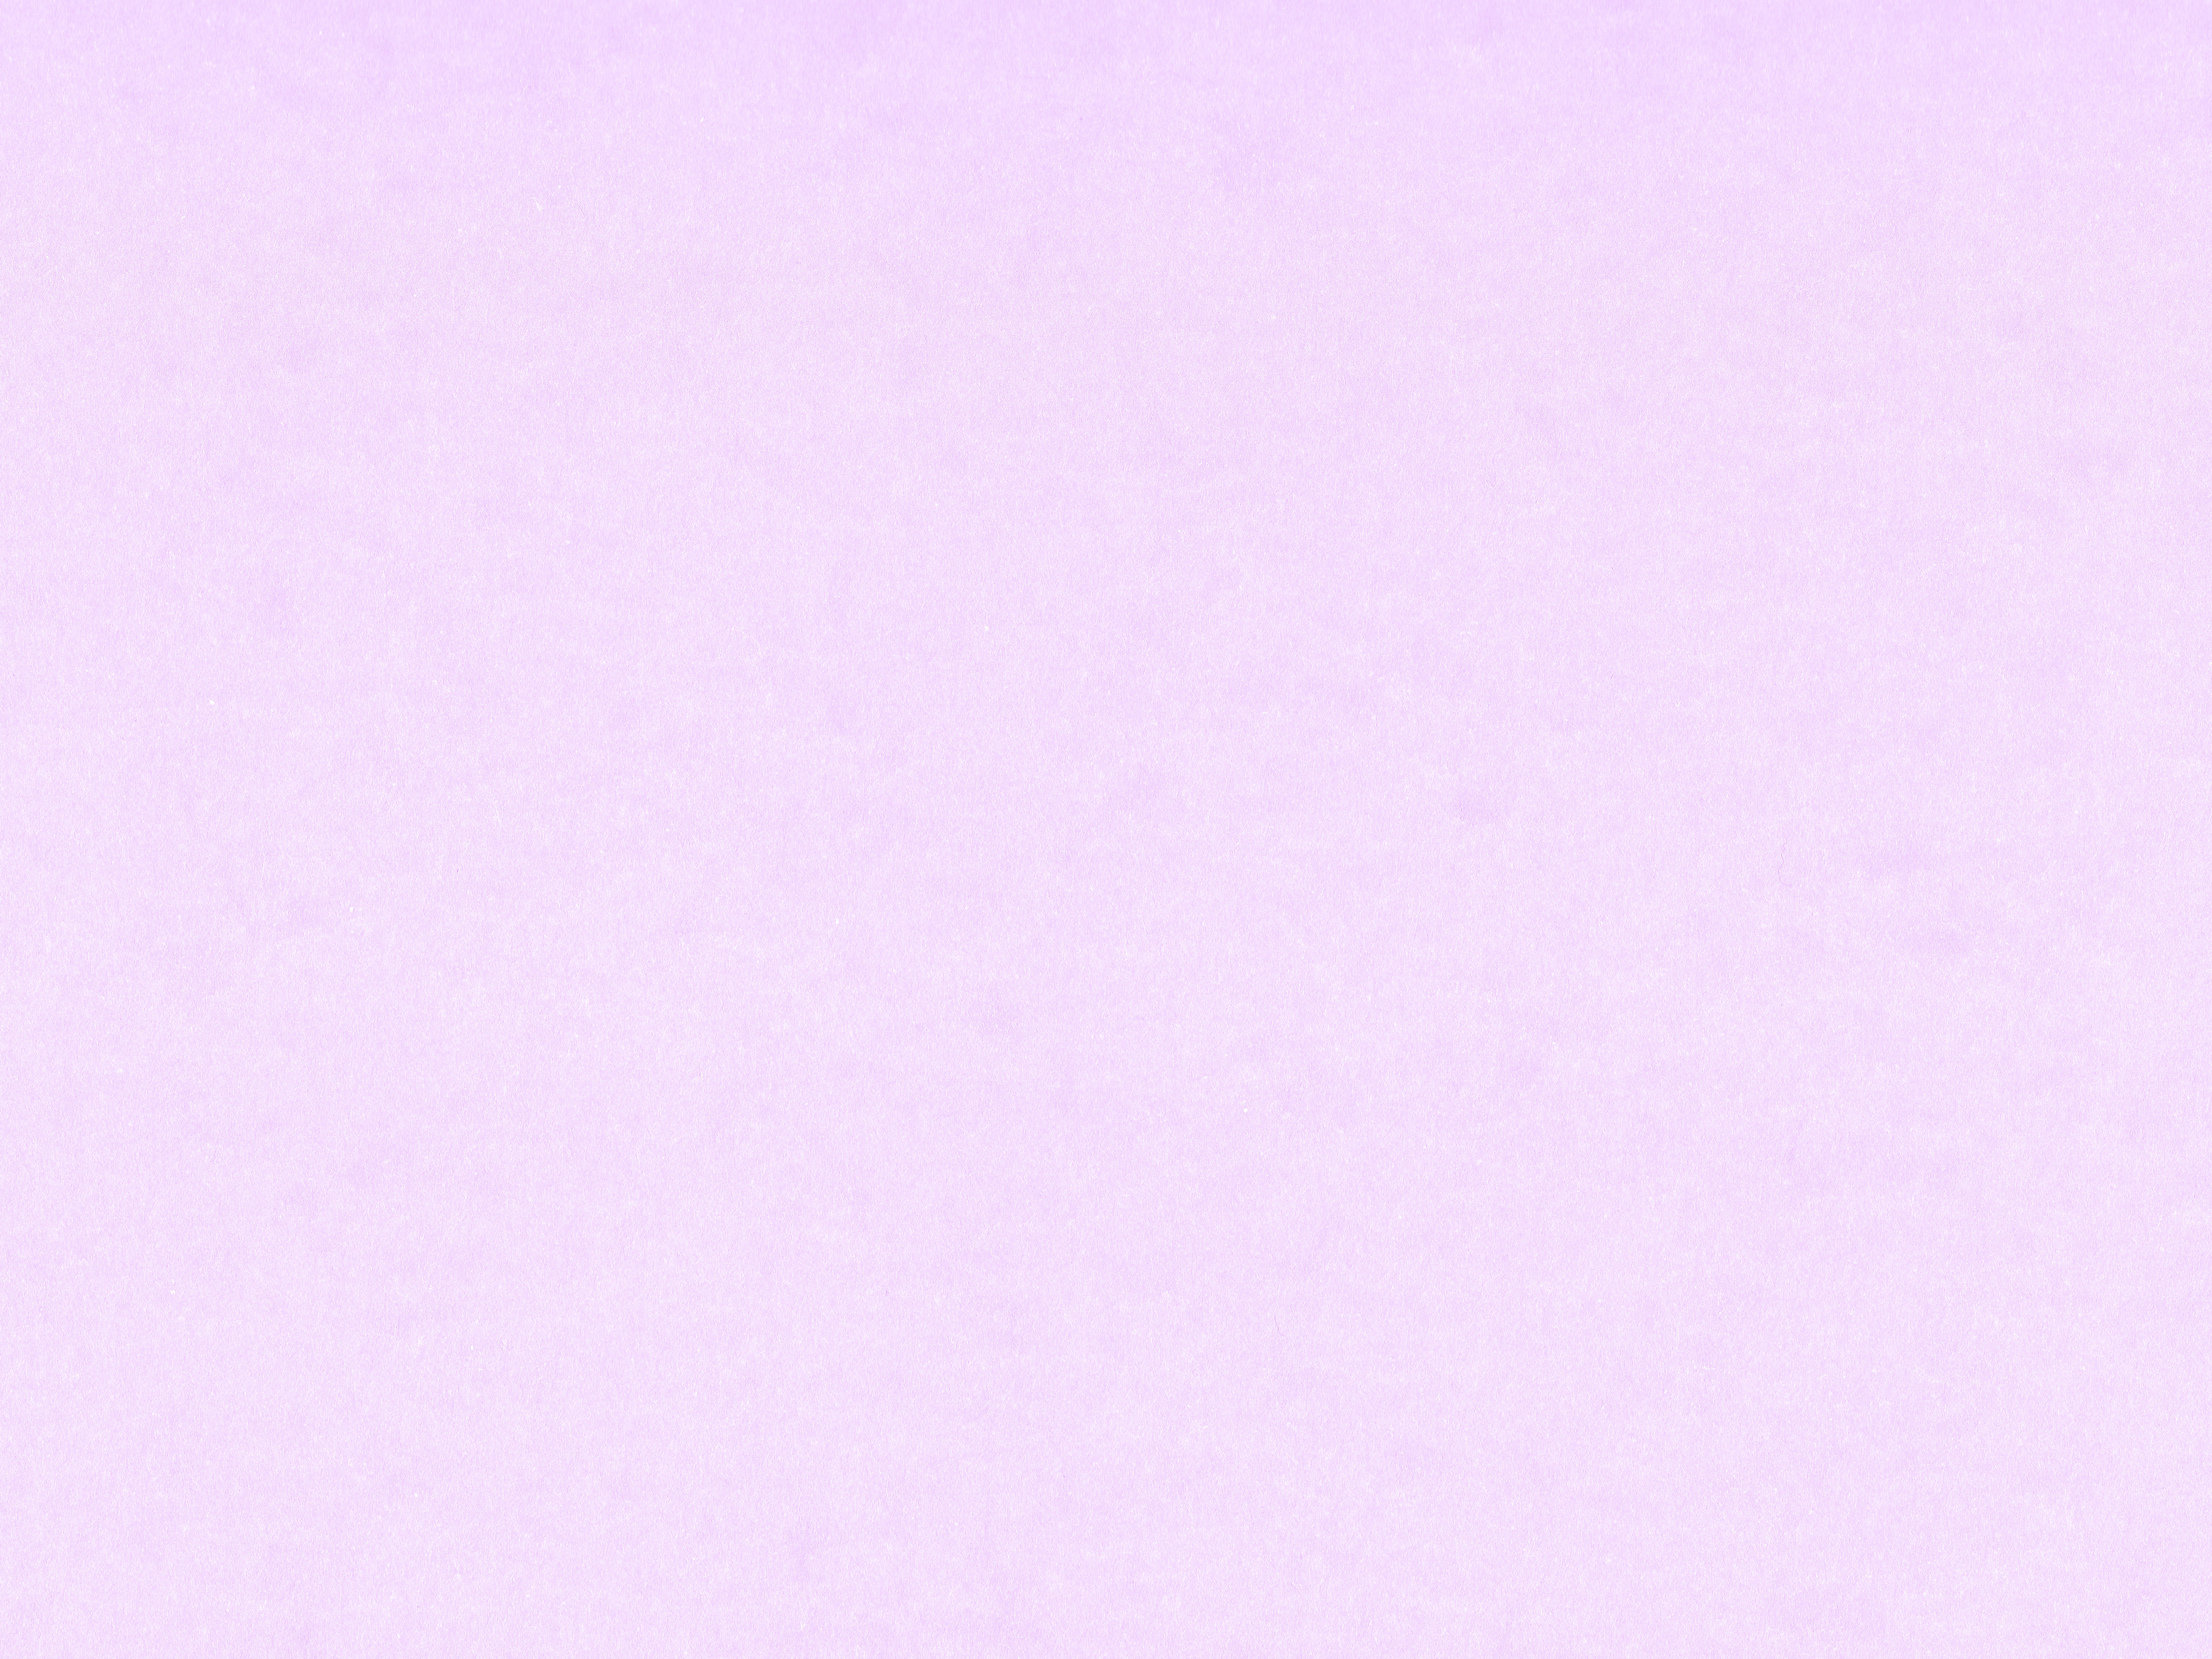 Lavender Purple Paper Texture with Flecks Picture, Free Photograph